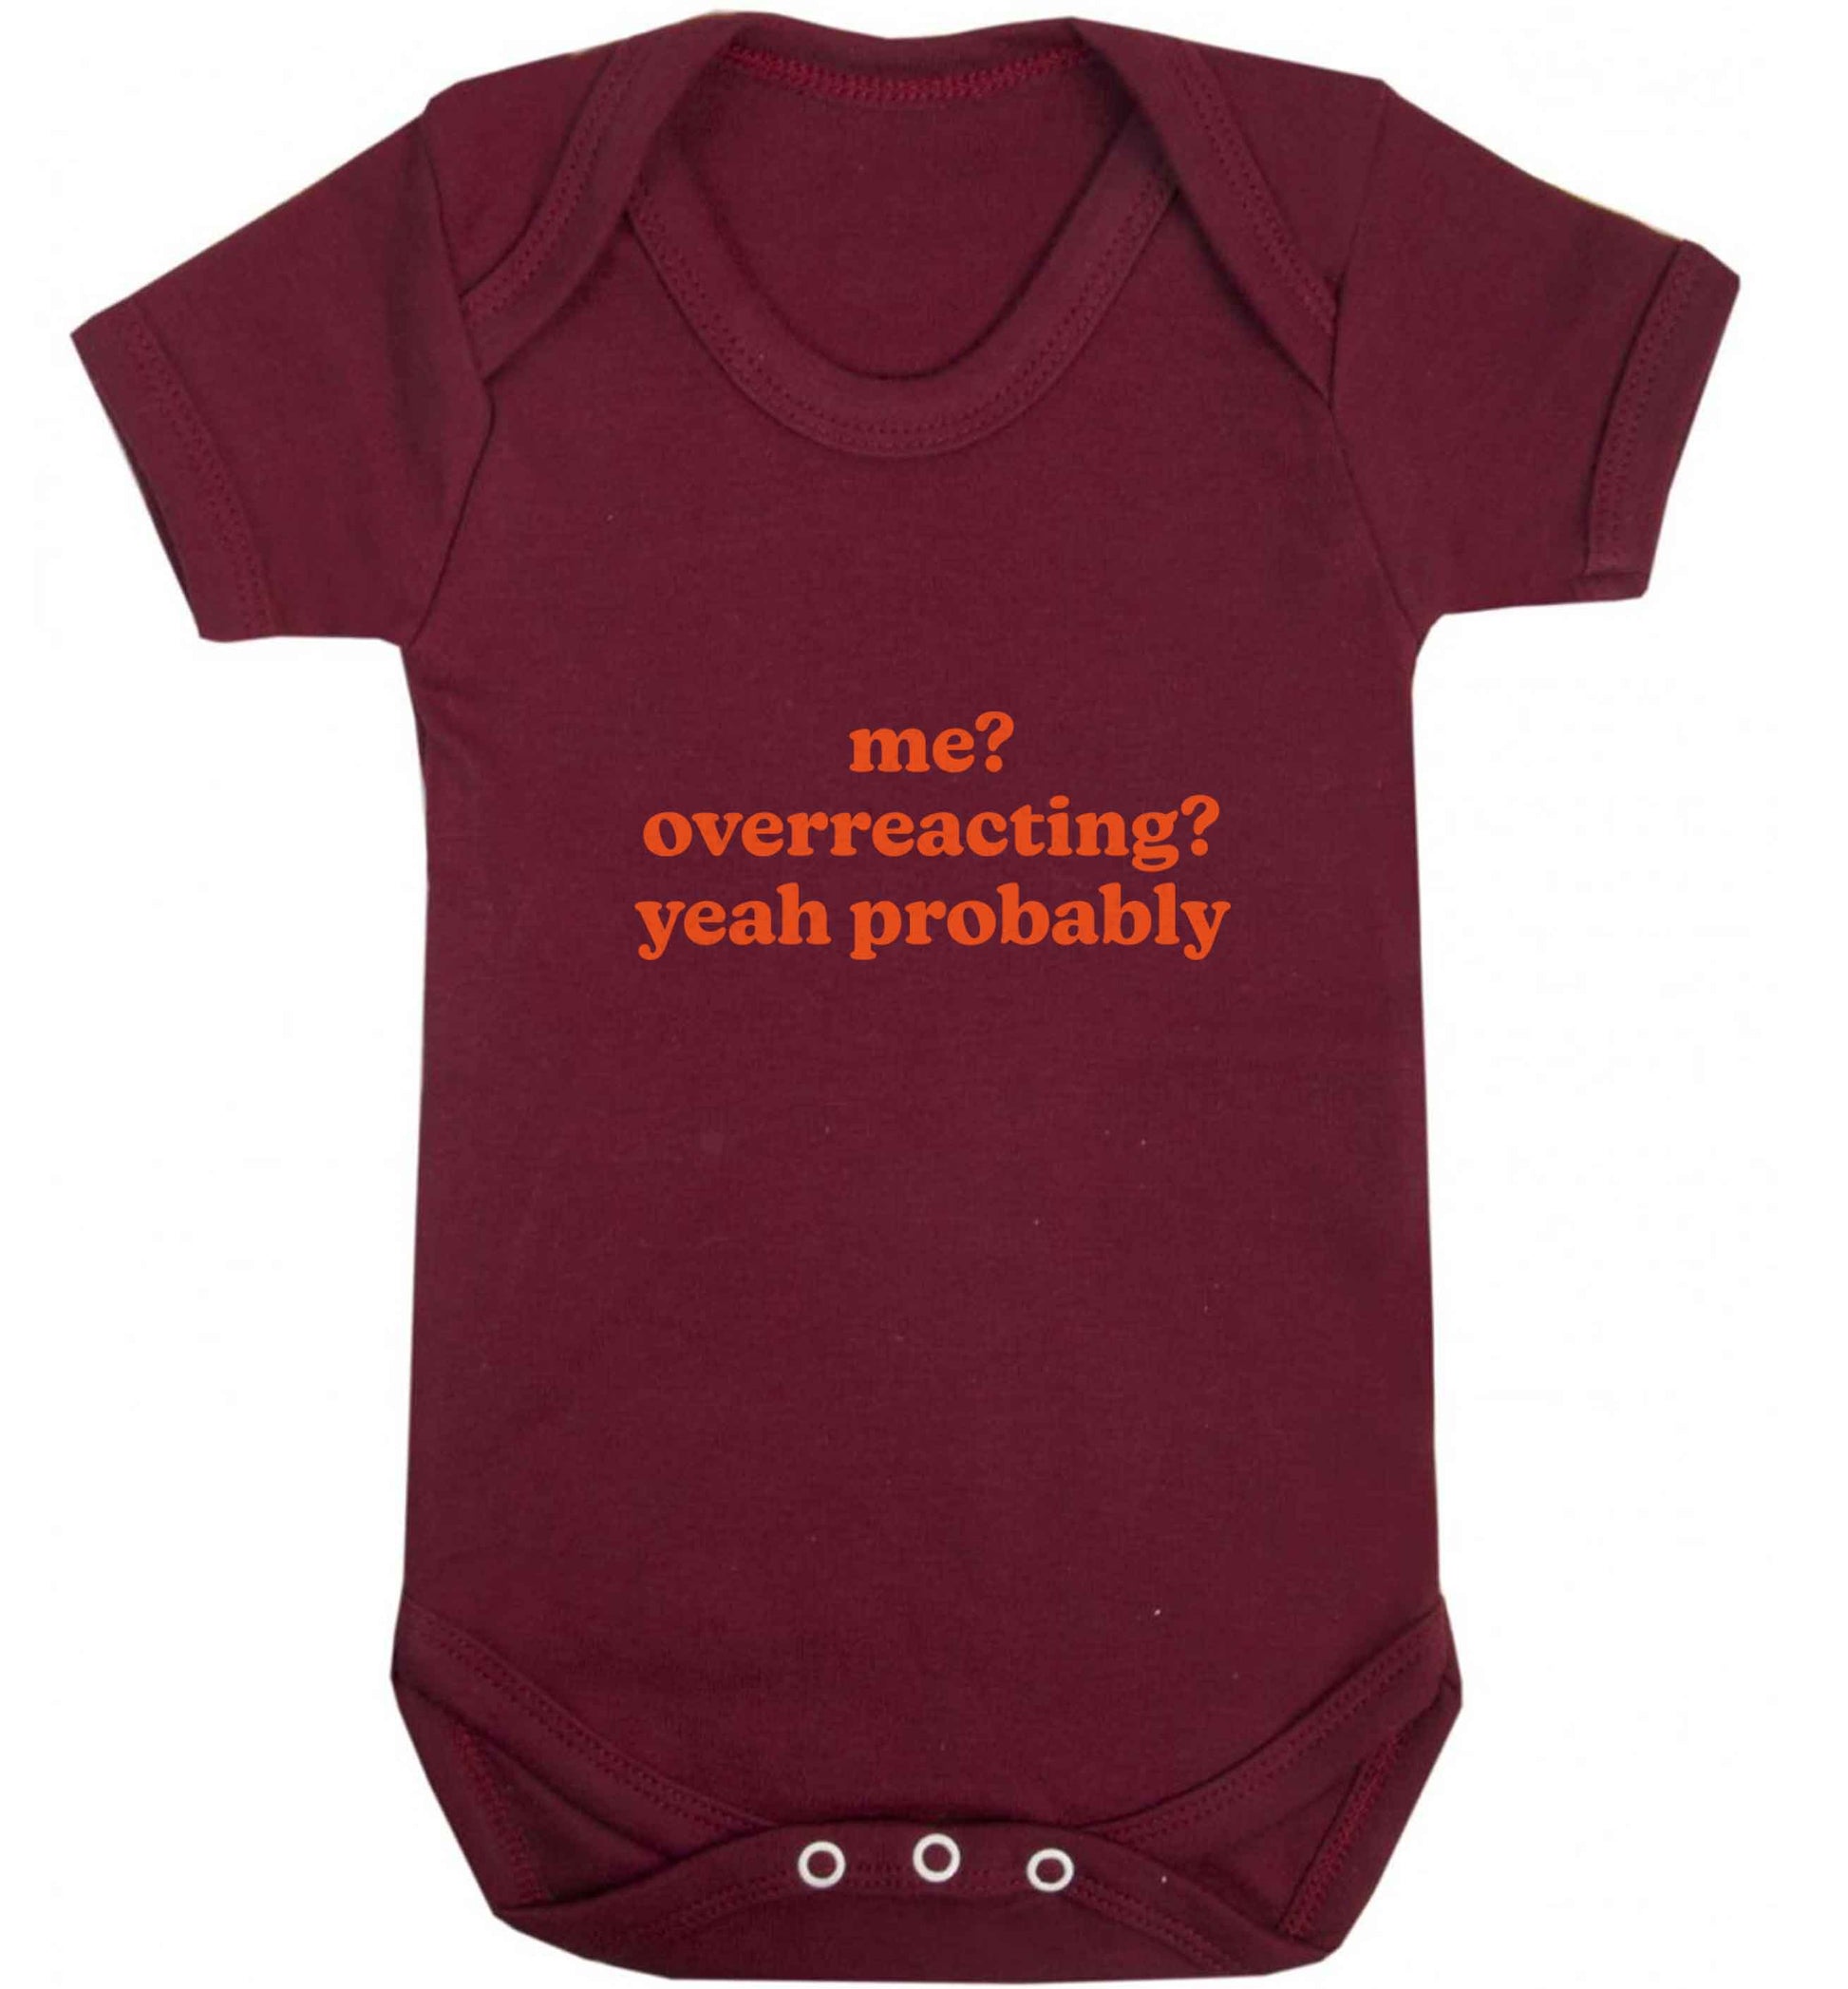 Me? Overreacting? Yeah probably baby vest maroon 18-24 months